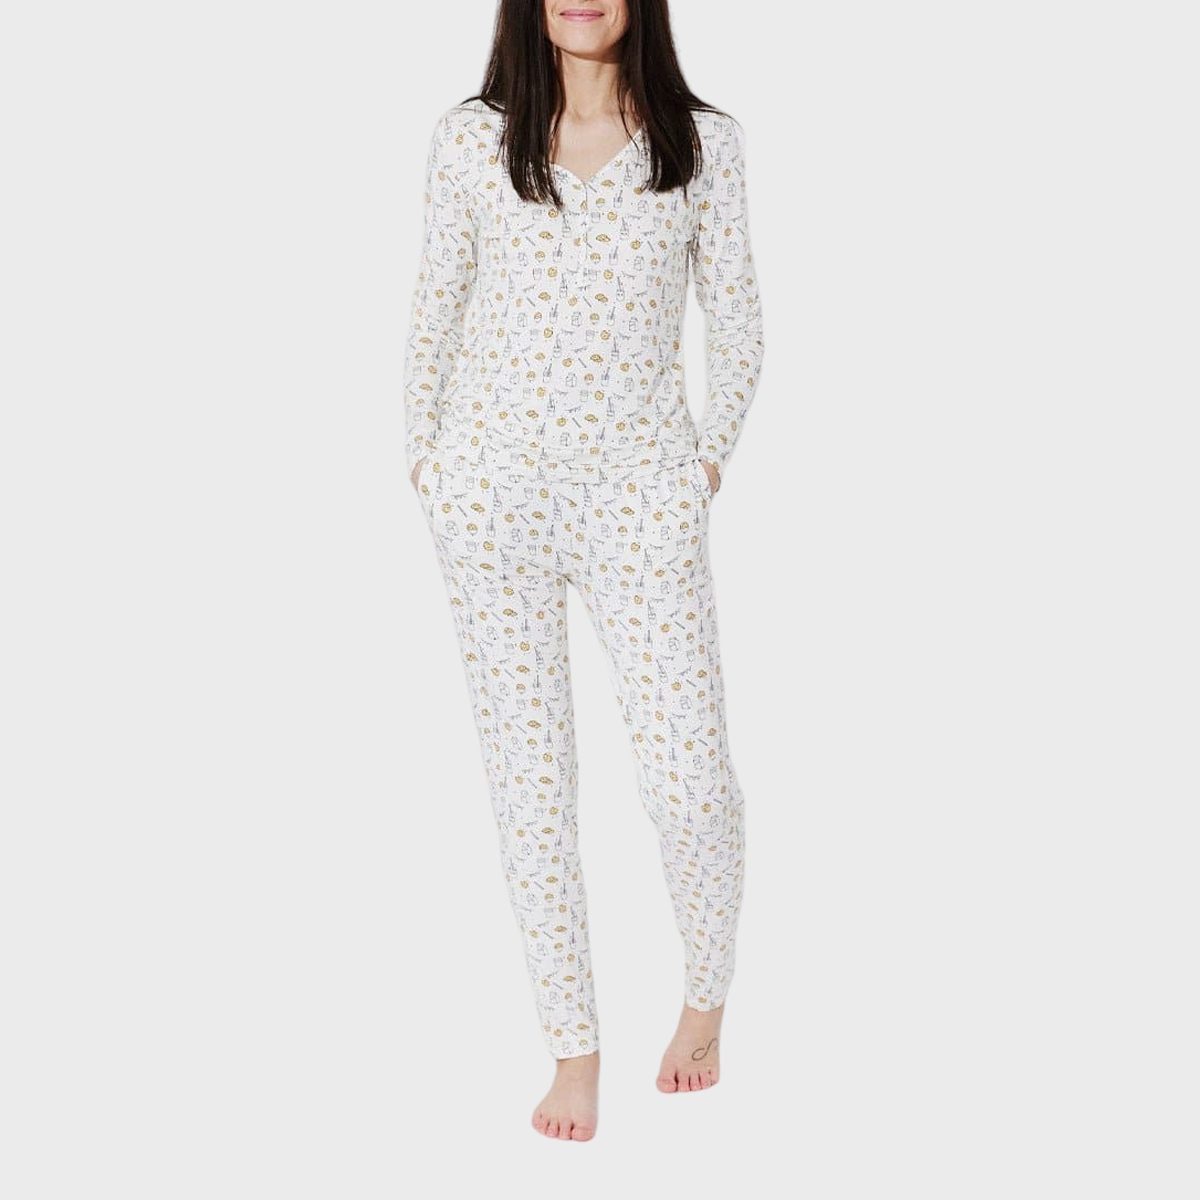 Bamboo Pajamas Are The Sustainable Sleepwear You Need